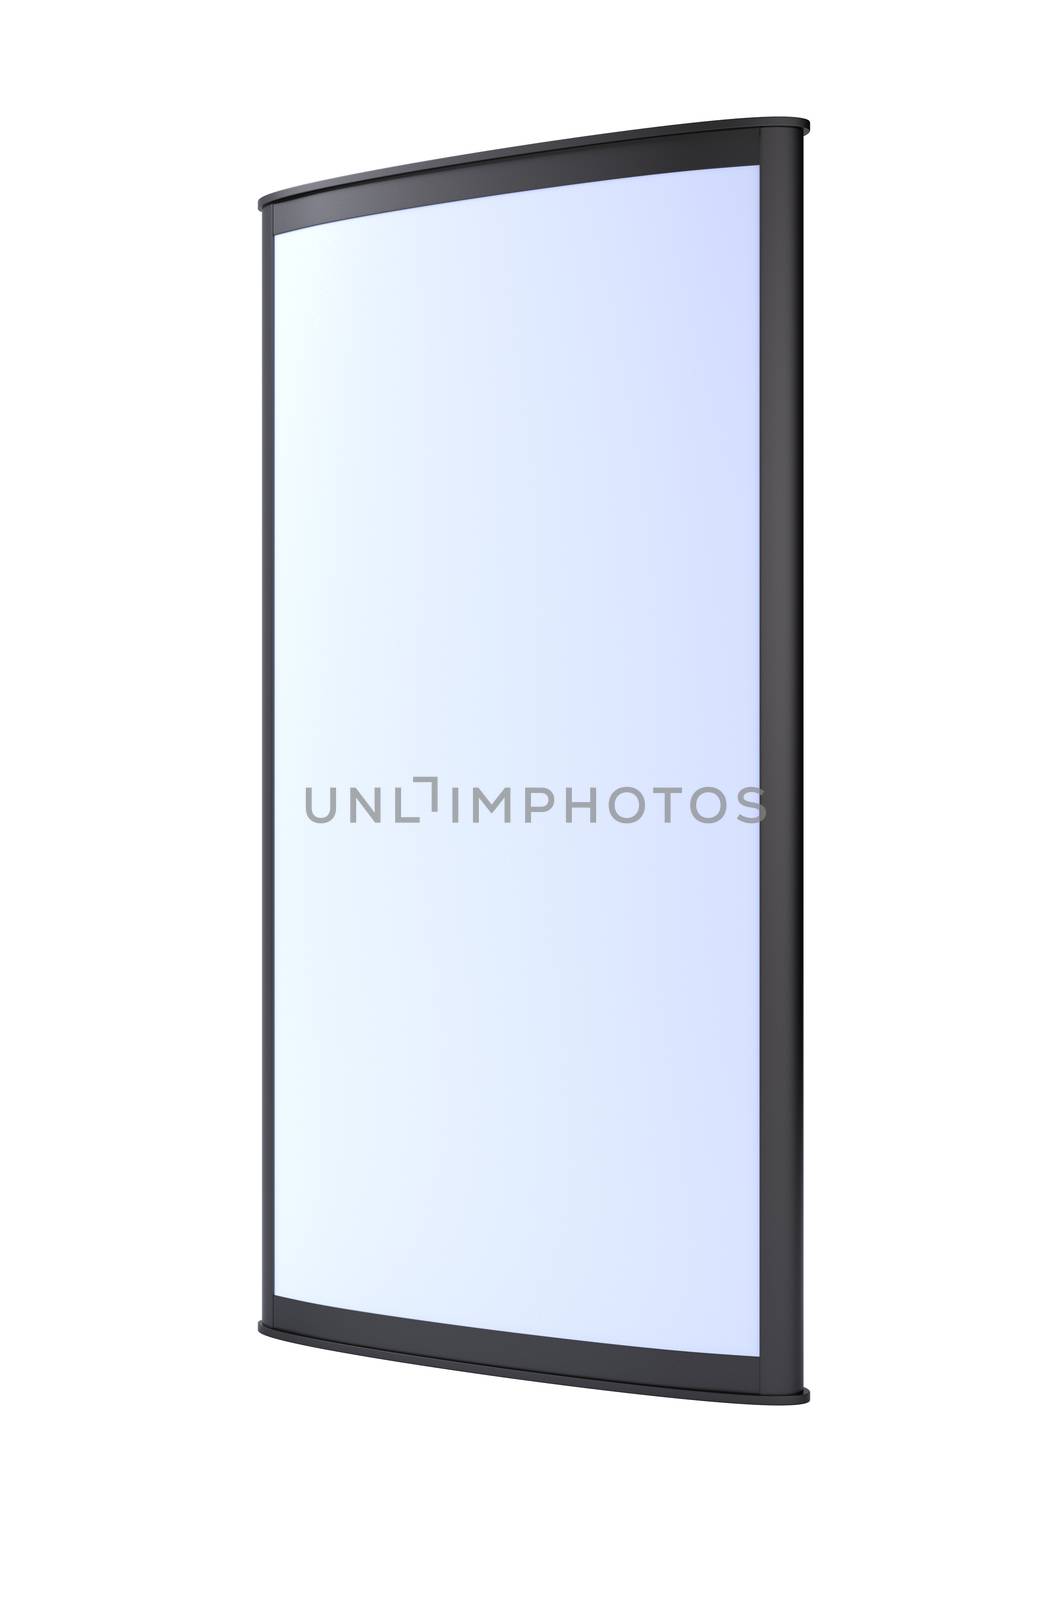 Advertising blank outdoor lightbox on white background. 3d render